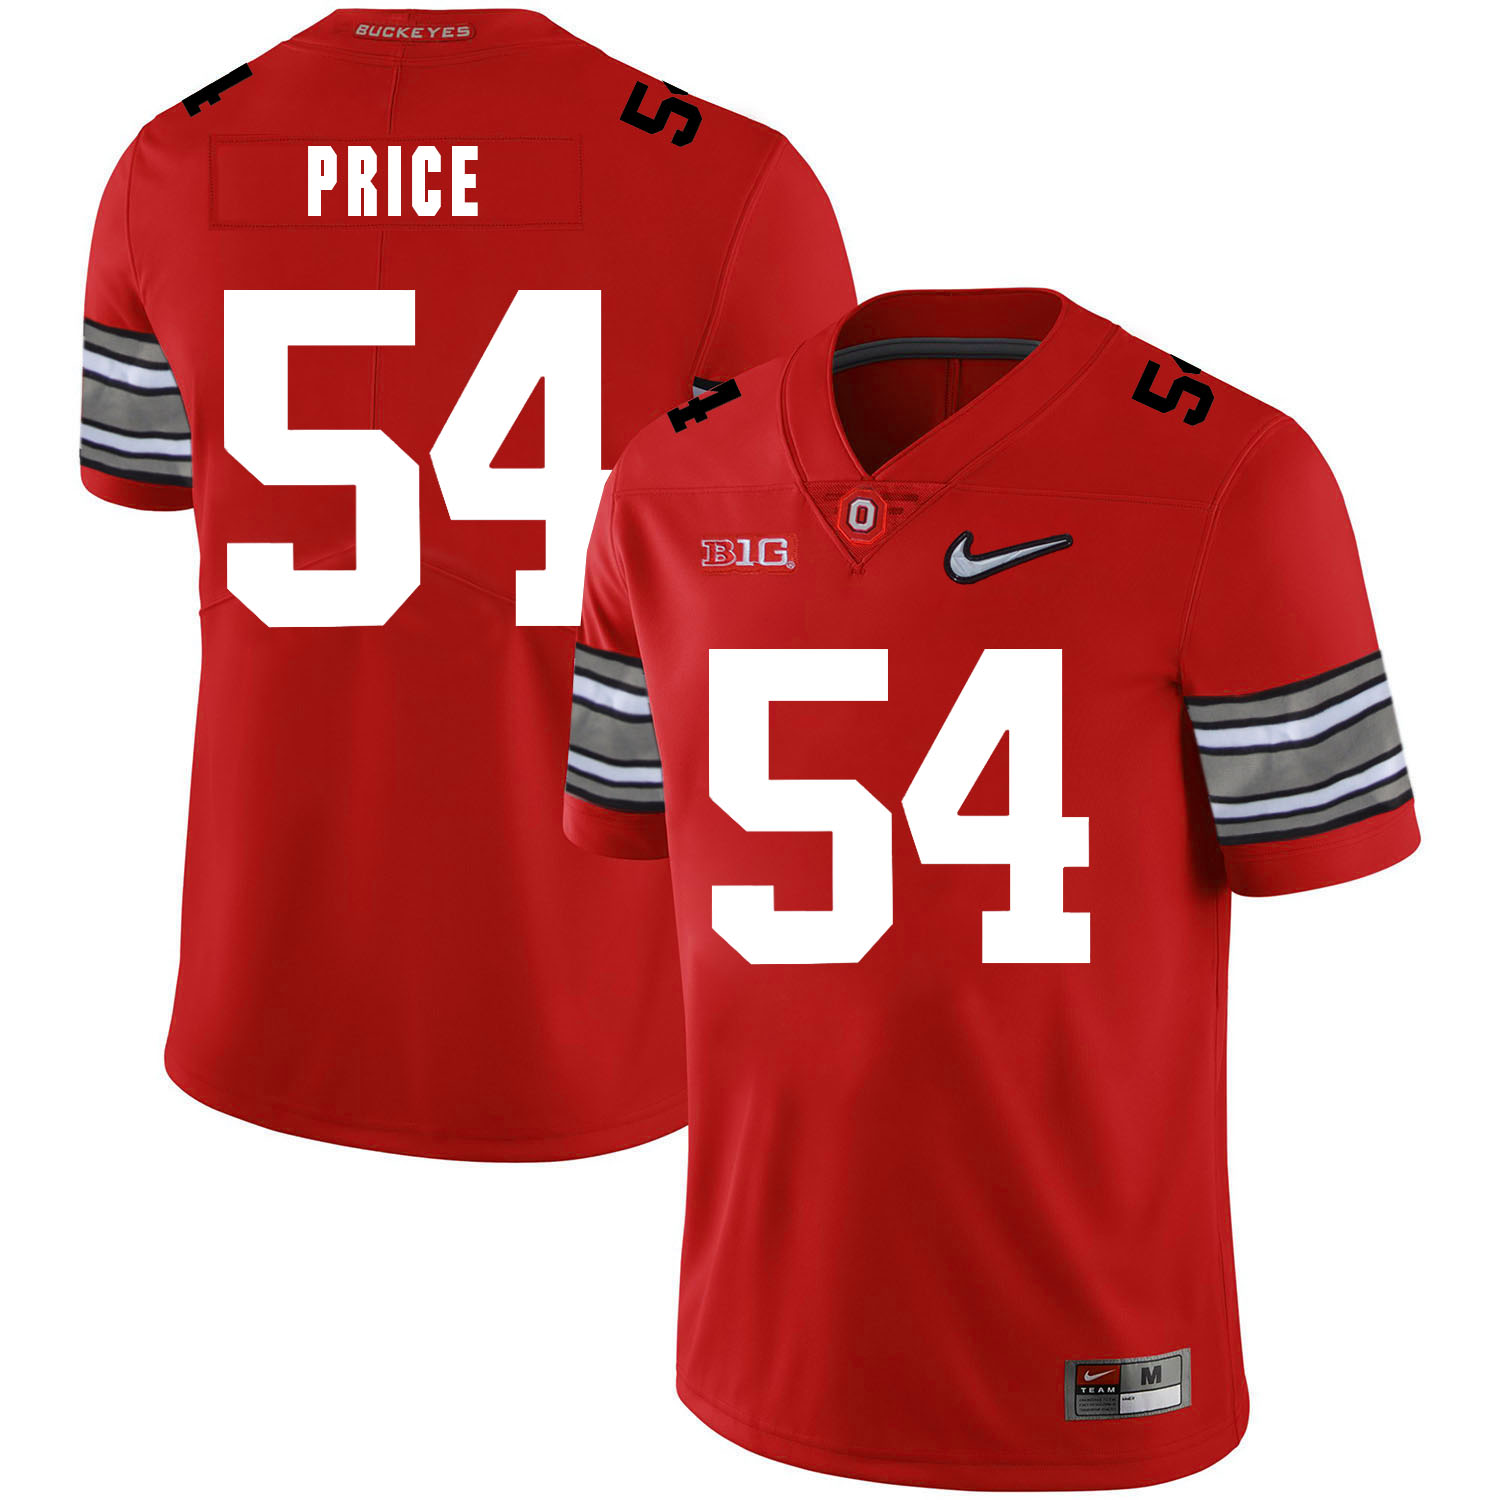 Ohio State Buckeyes 54 Billy Price Red Diamond Nike Logo College Football Jersey